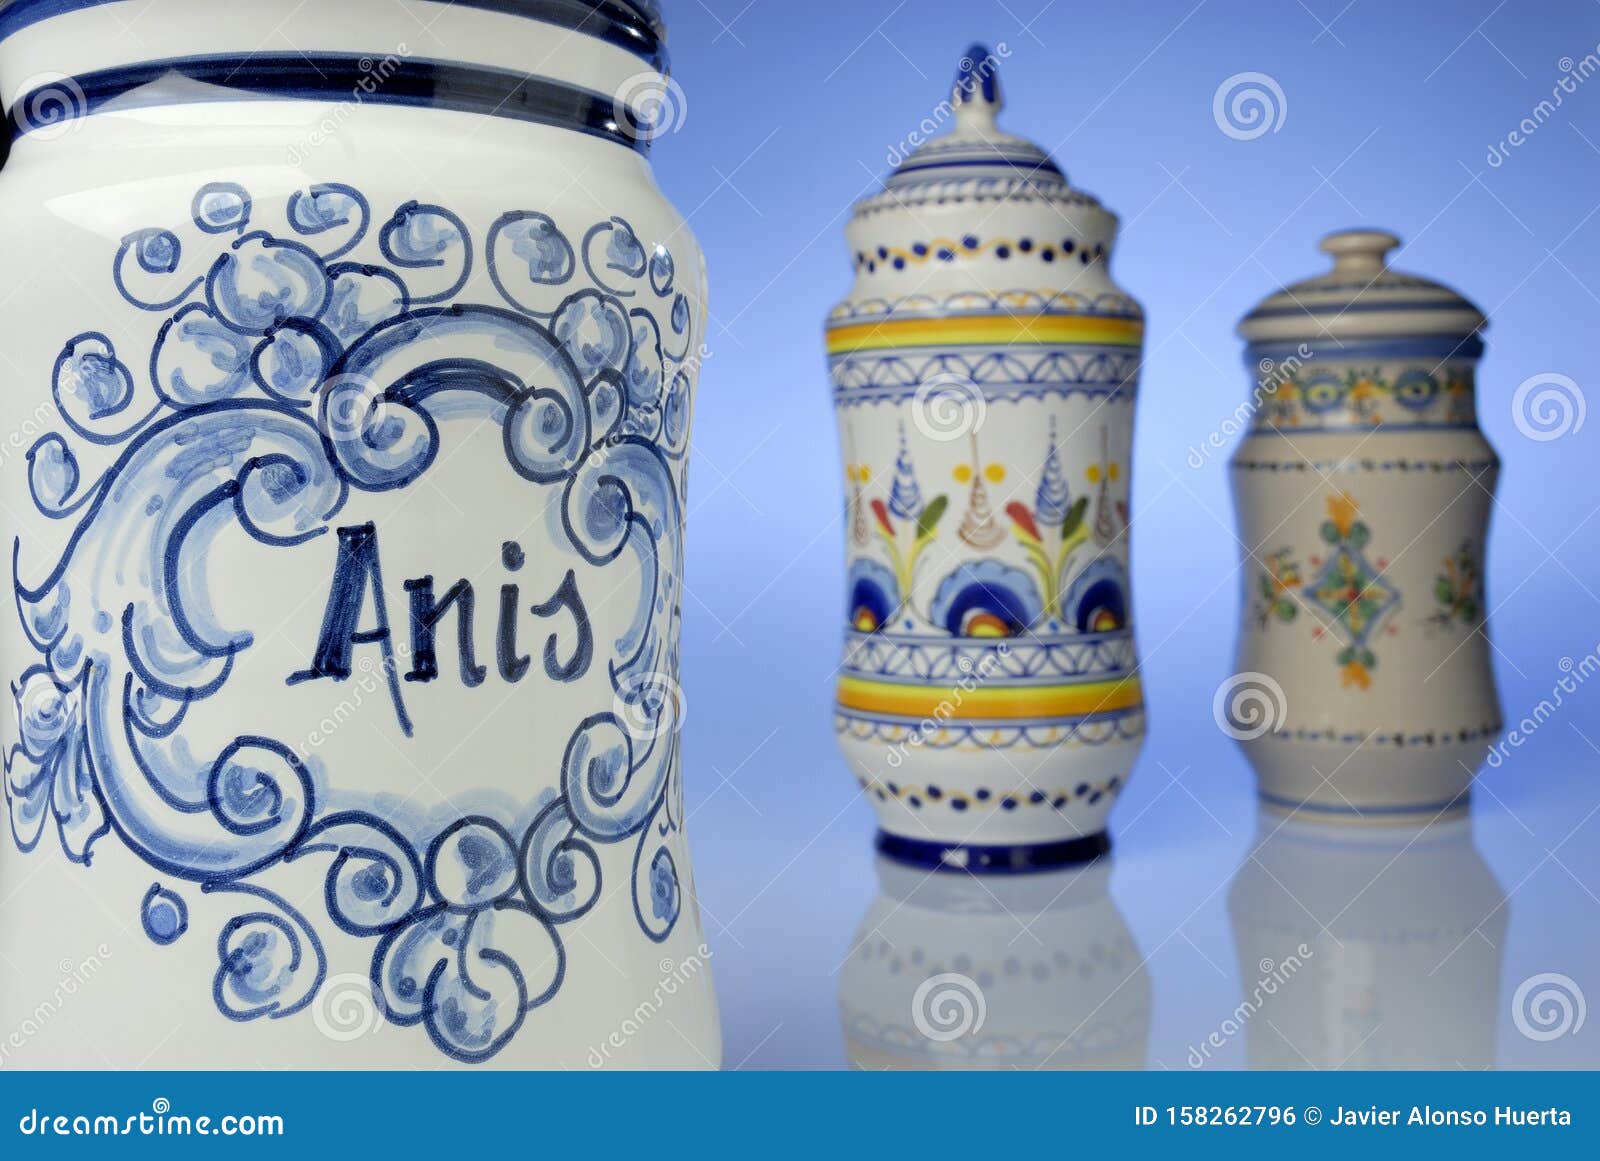 antique pharmacy jars of artisanal ceramics, natural medicine